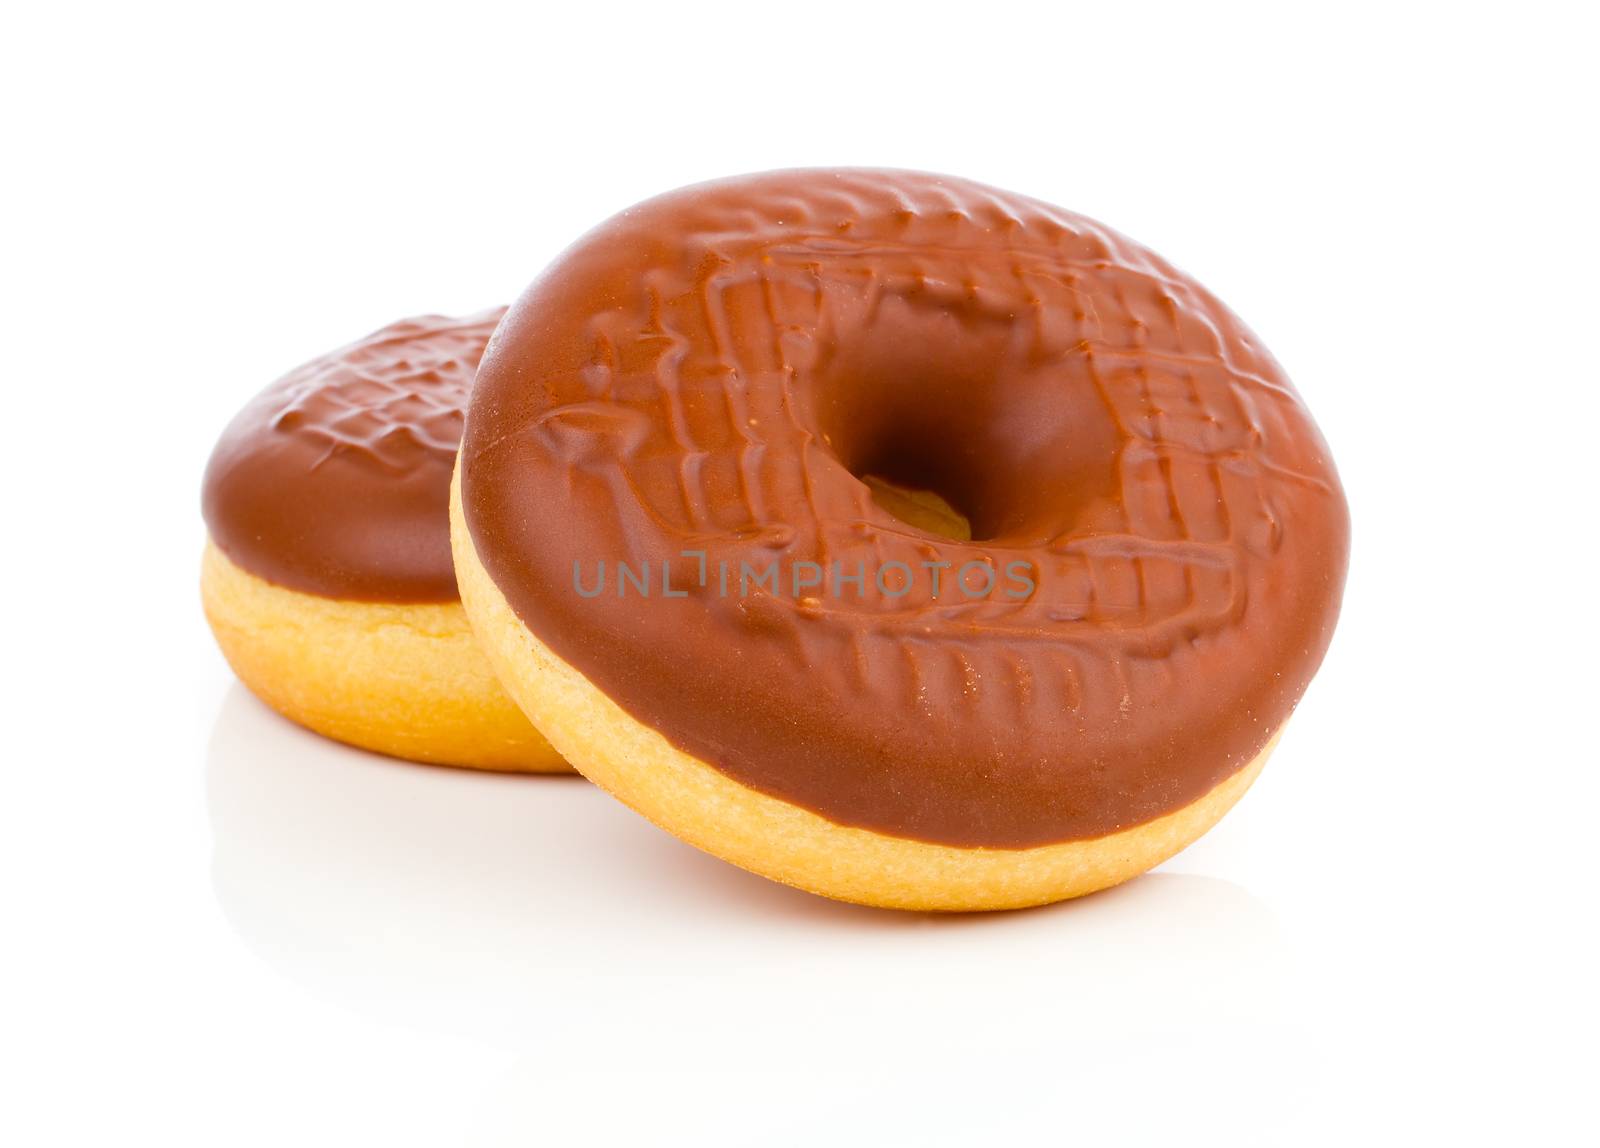 donut. chocolate donuts on background by motorolka